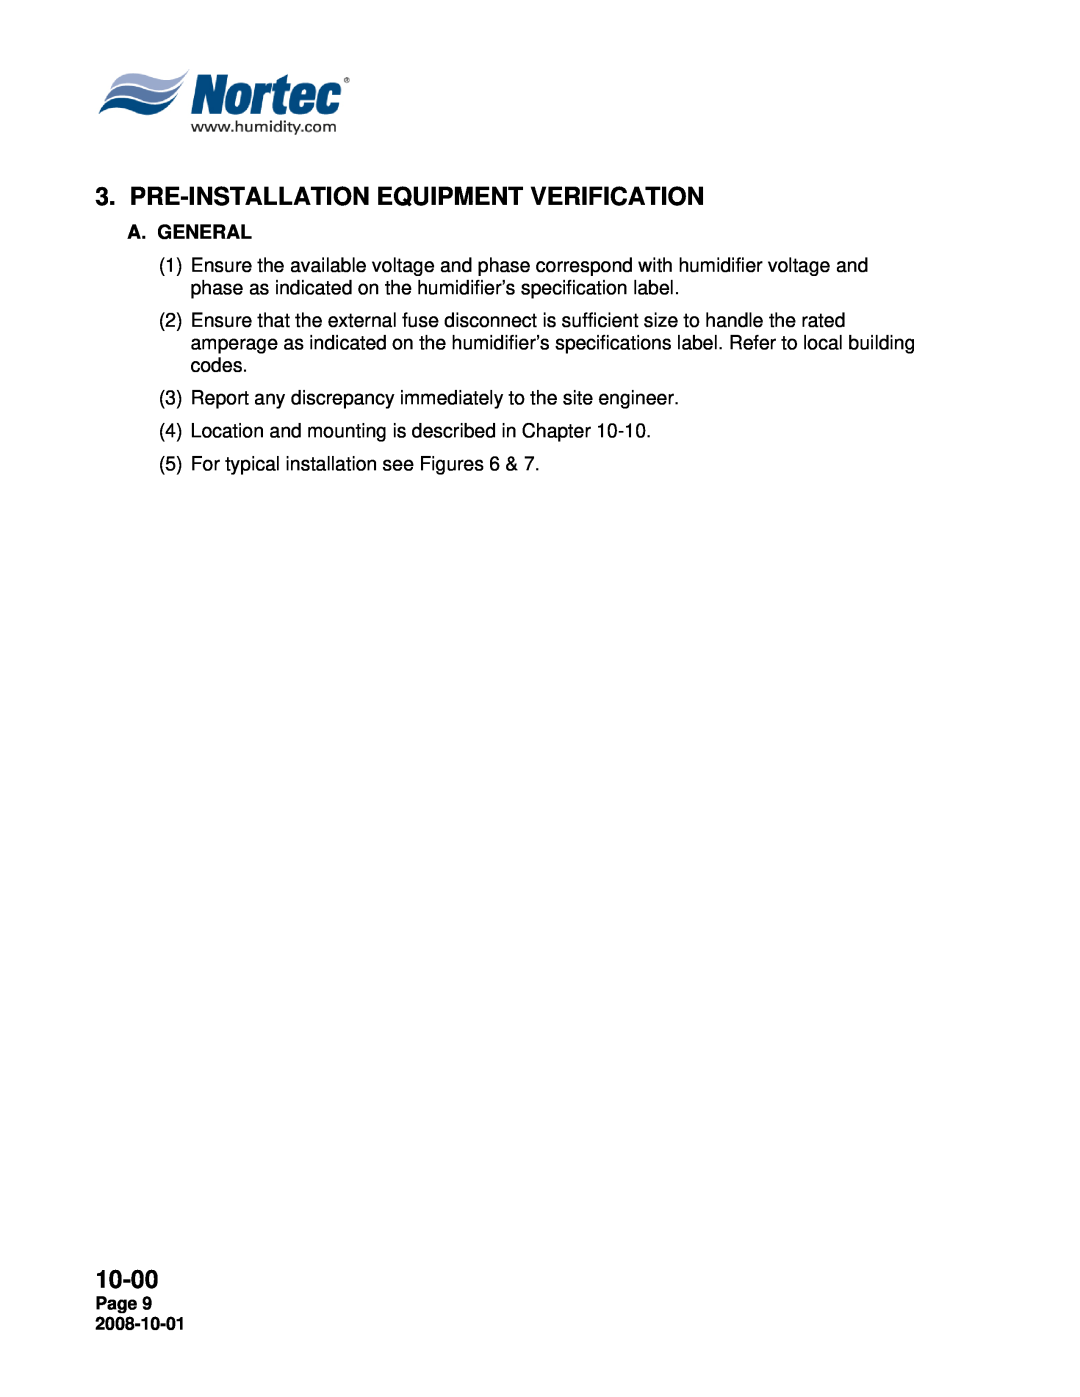 Nortec NHTC, NHPC manual Pre-Installationequipment Verification, 10-00, A.General 